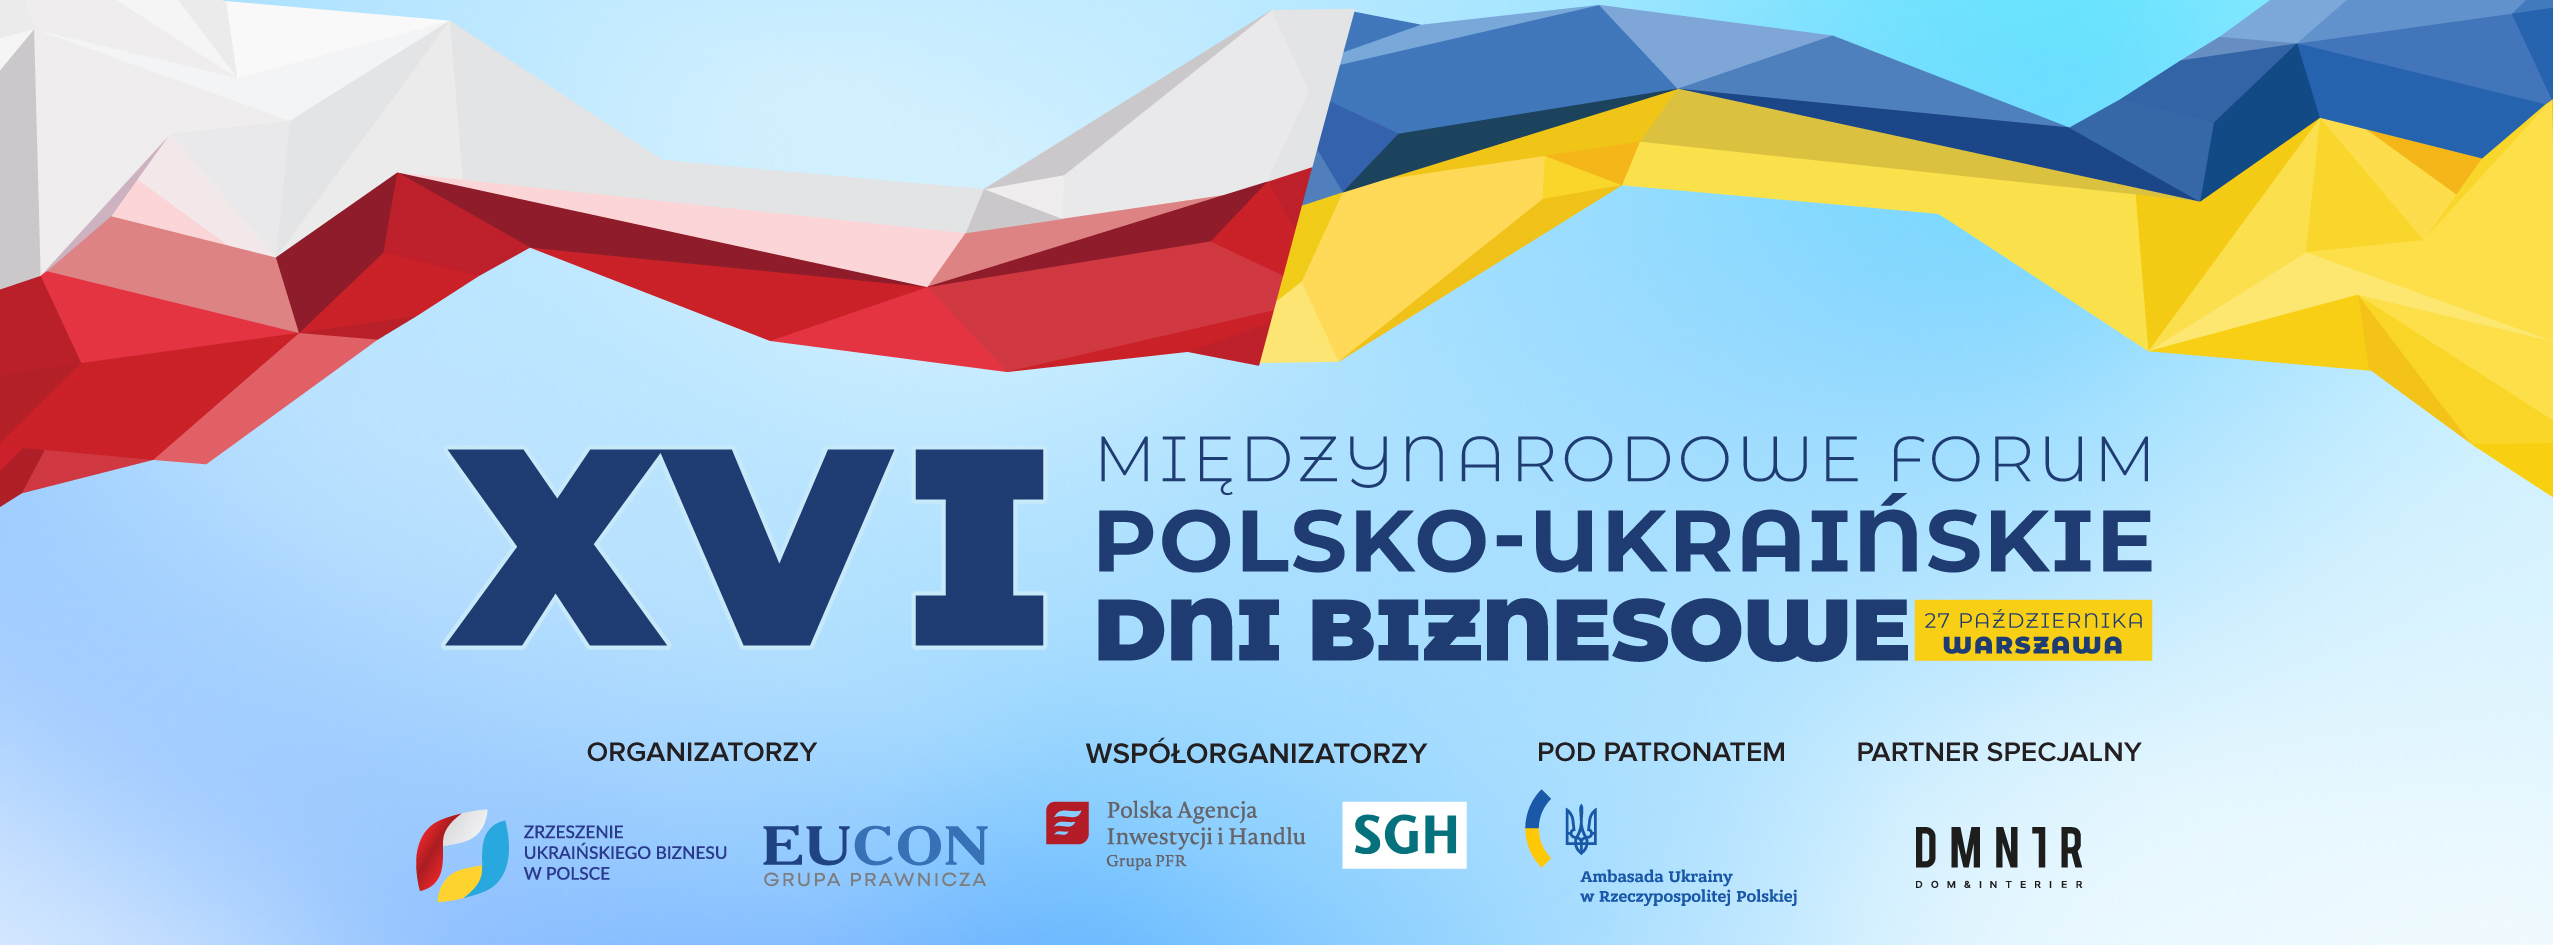 XVI International Forum “Polish-Ukrainian Business Days”